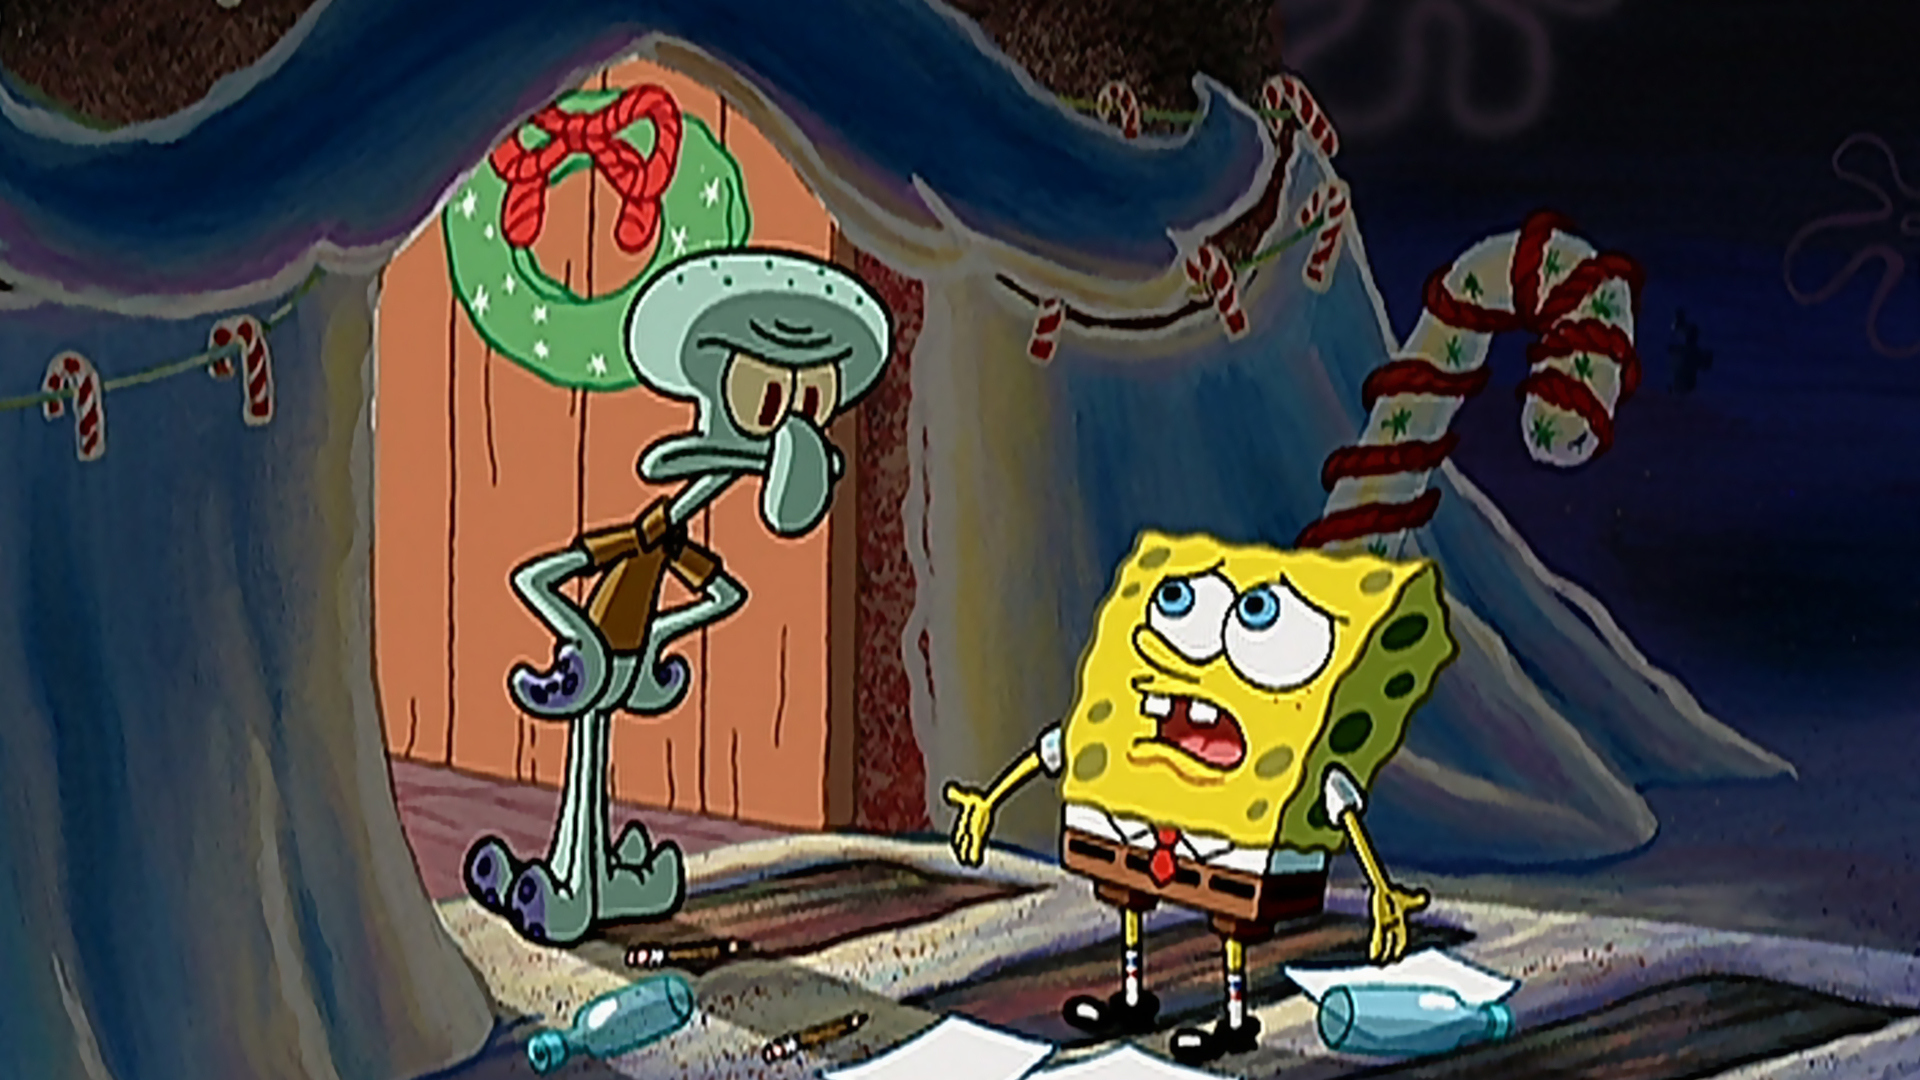 spongebob squarepants episodes full free